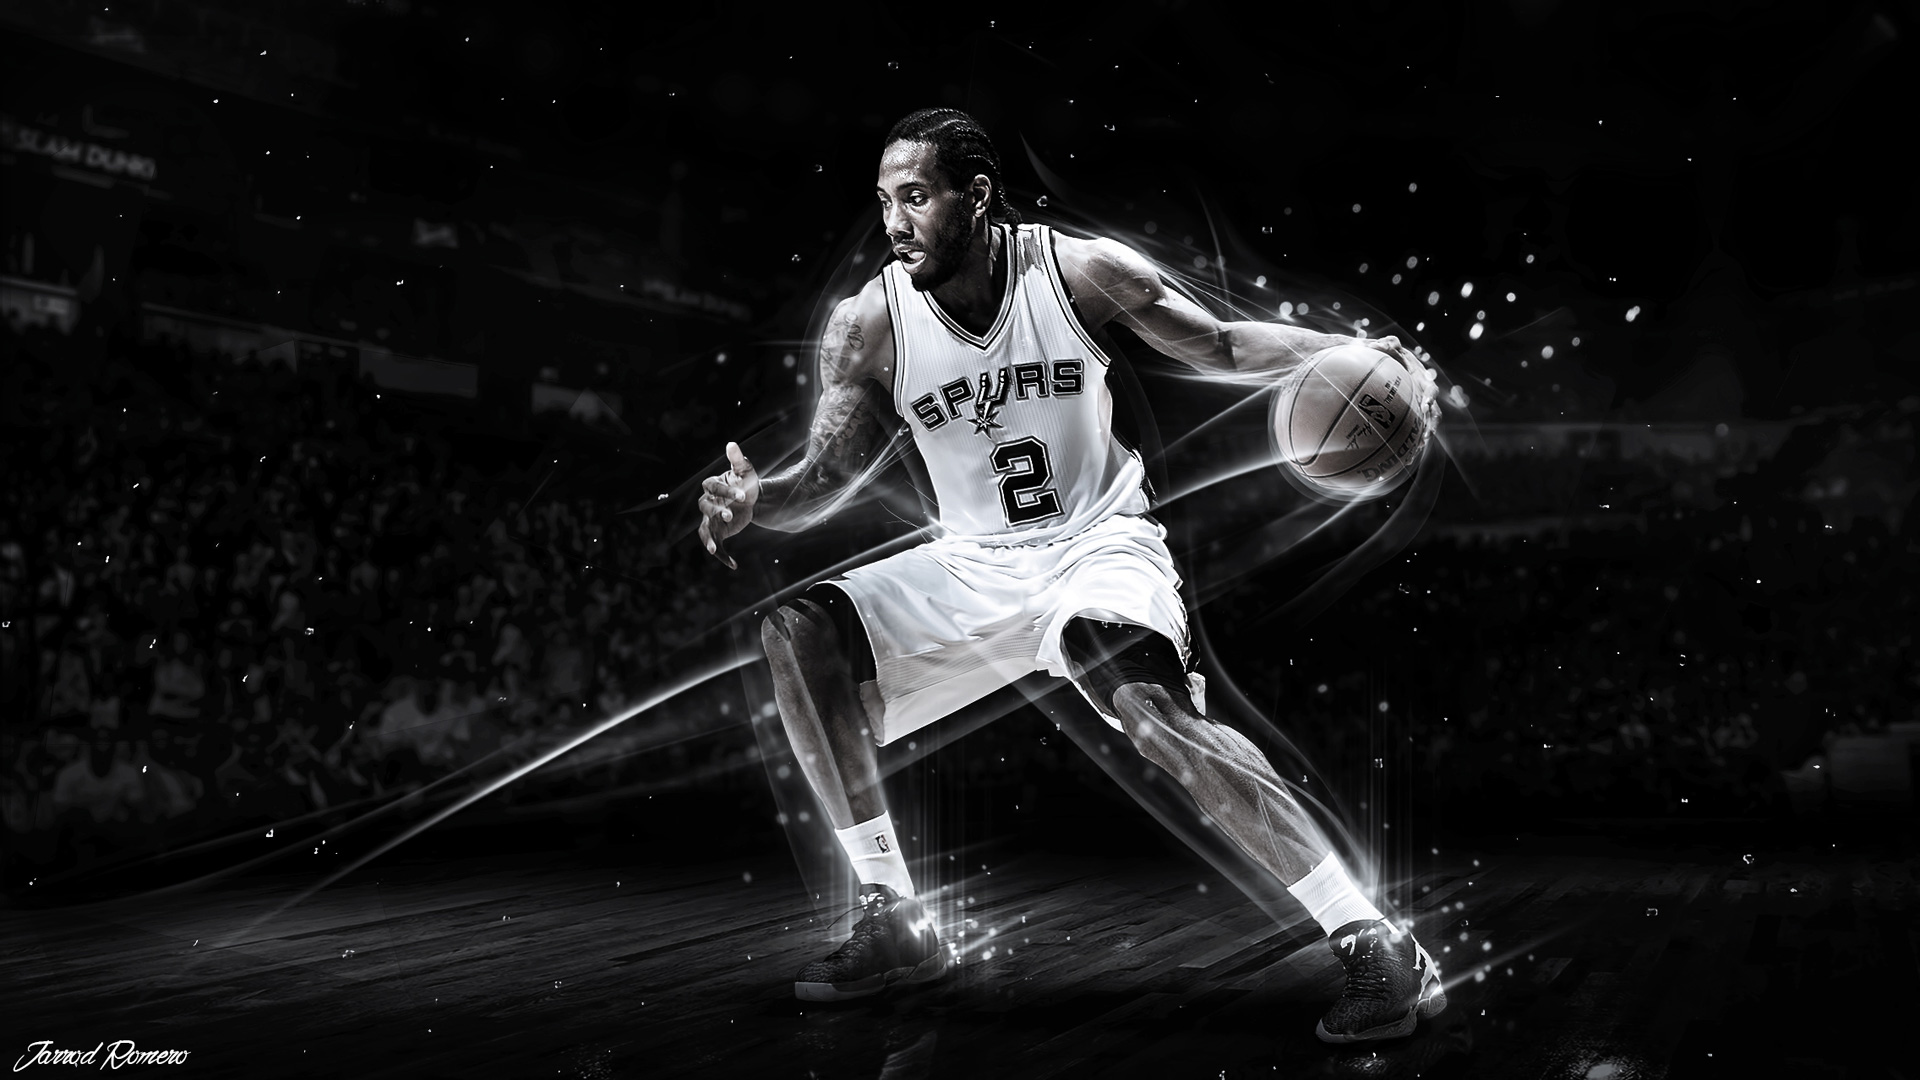 San Antonio Spurs 2014 Champions Wallpaper  Basketball Wallpapers at